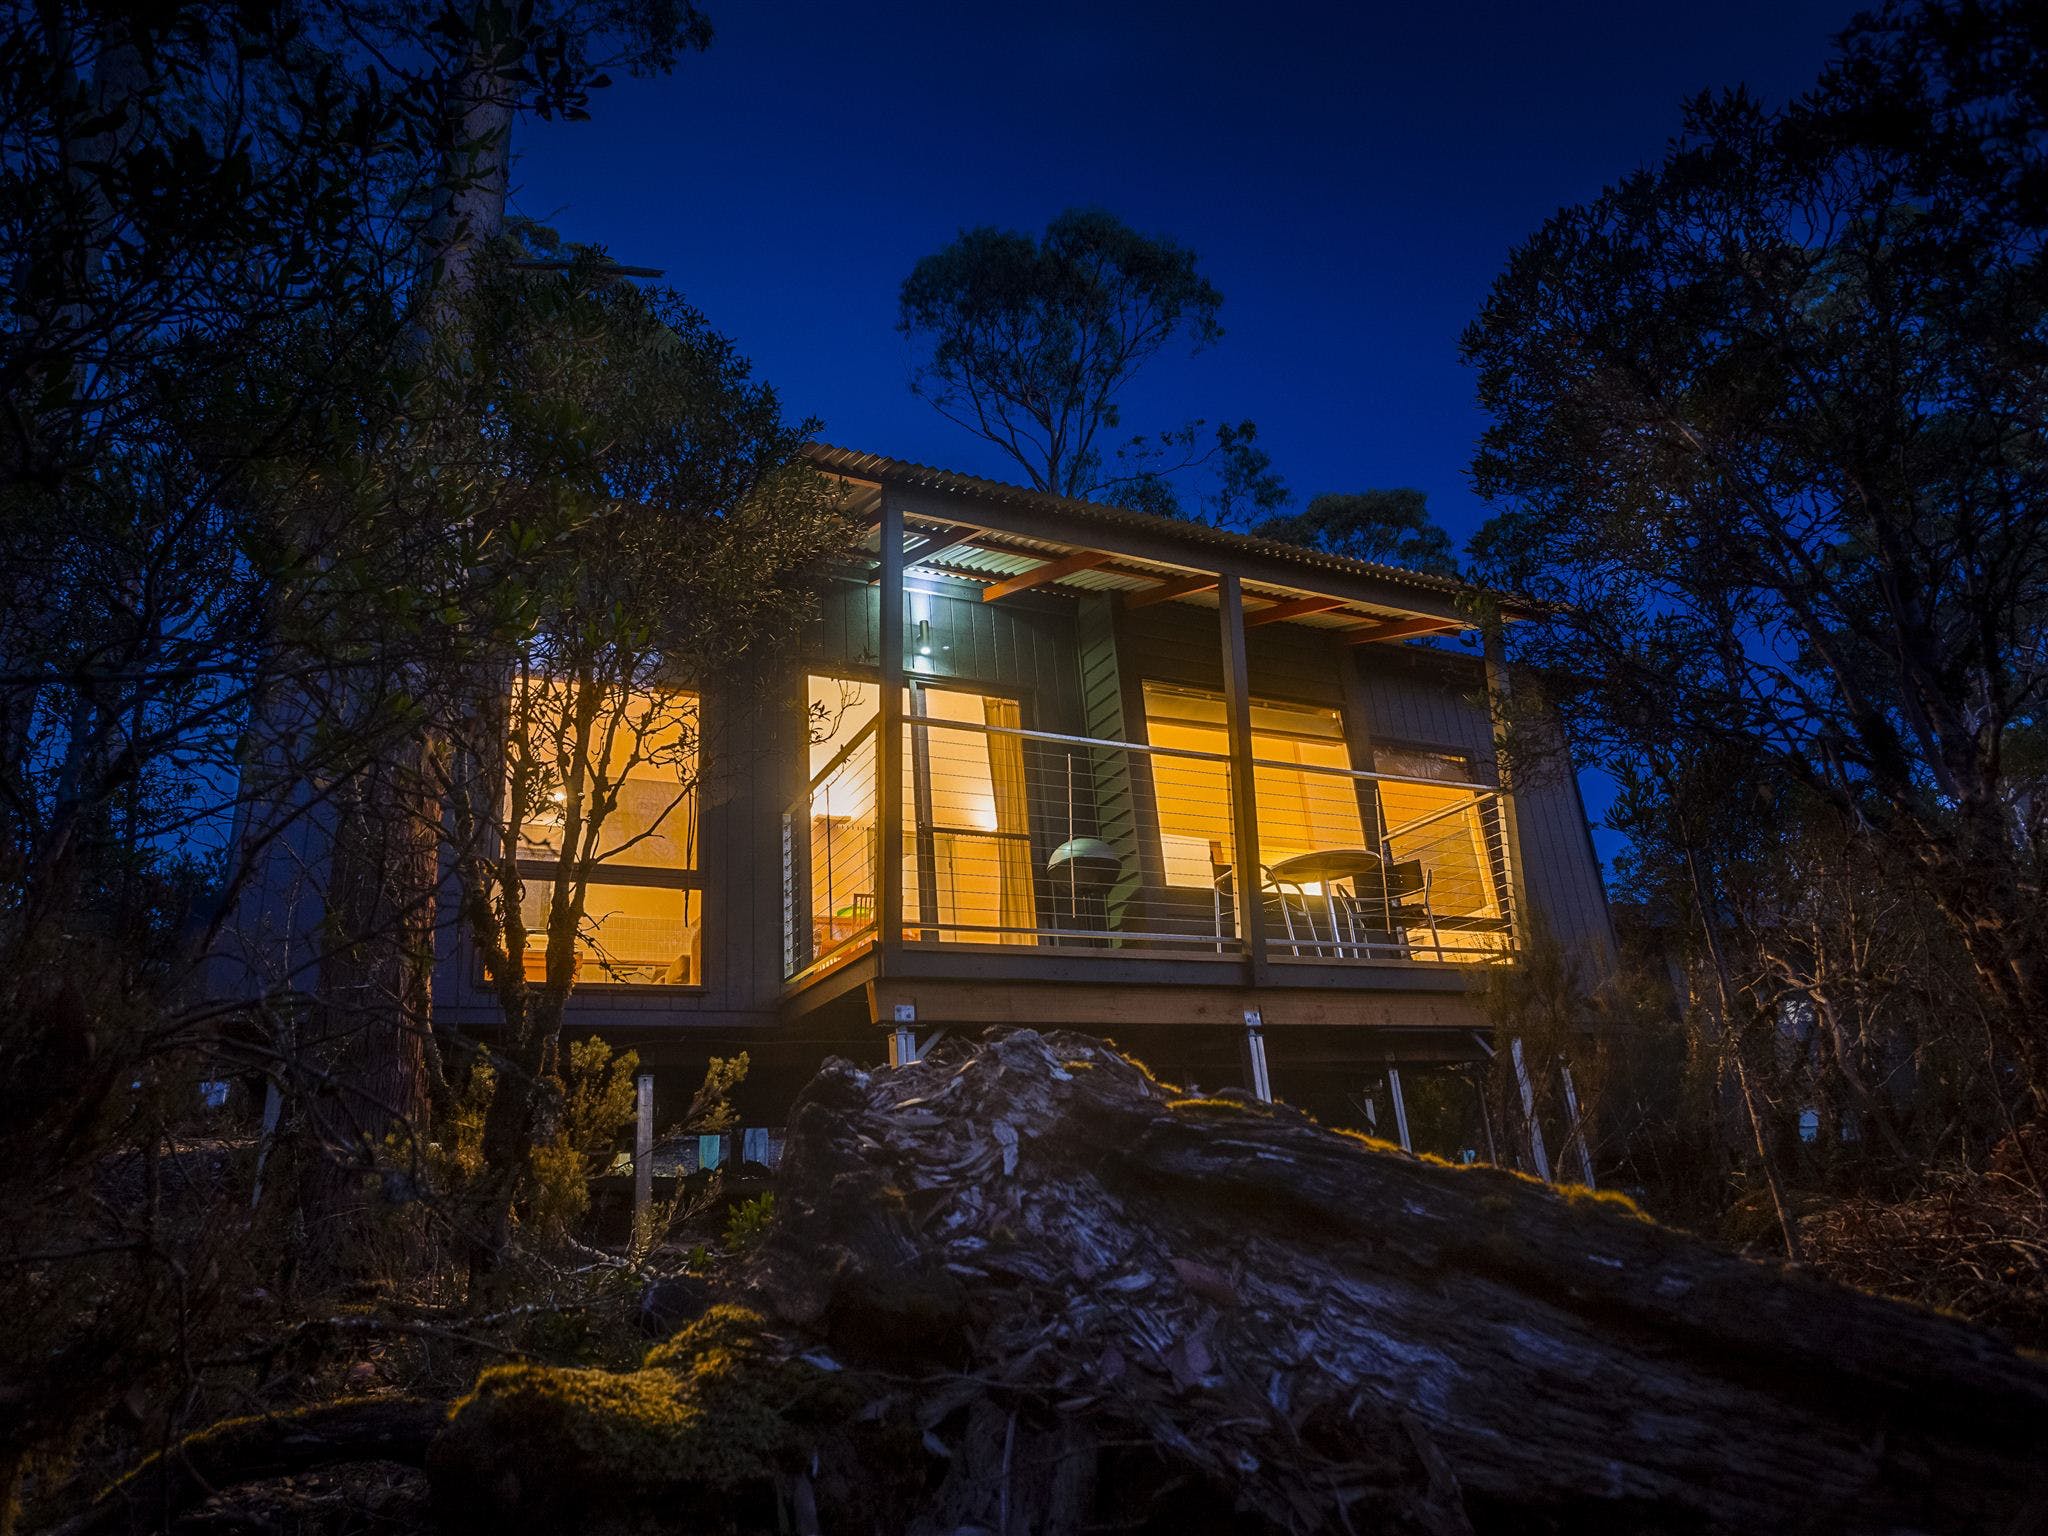 Cradle Mountain Wilderness Village - Accommodation Australia